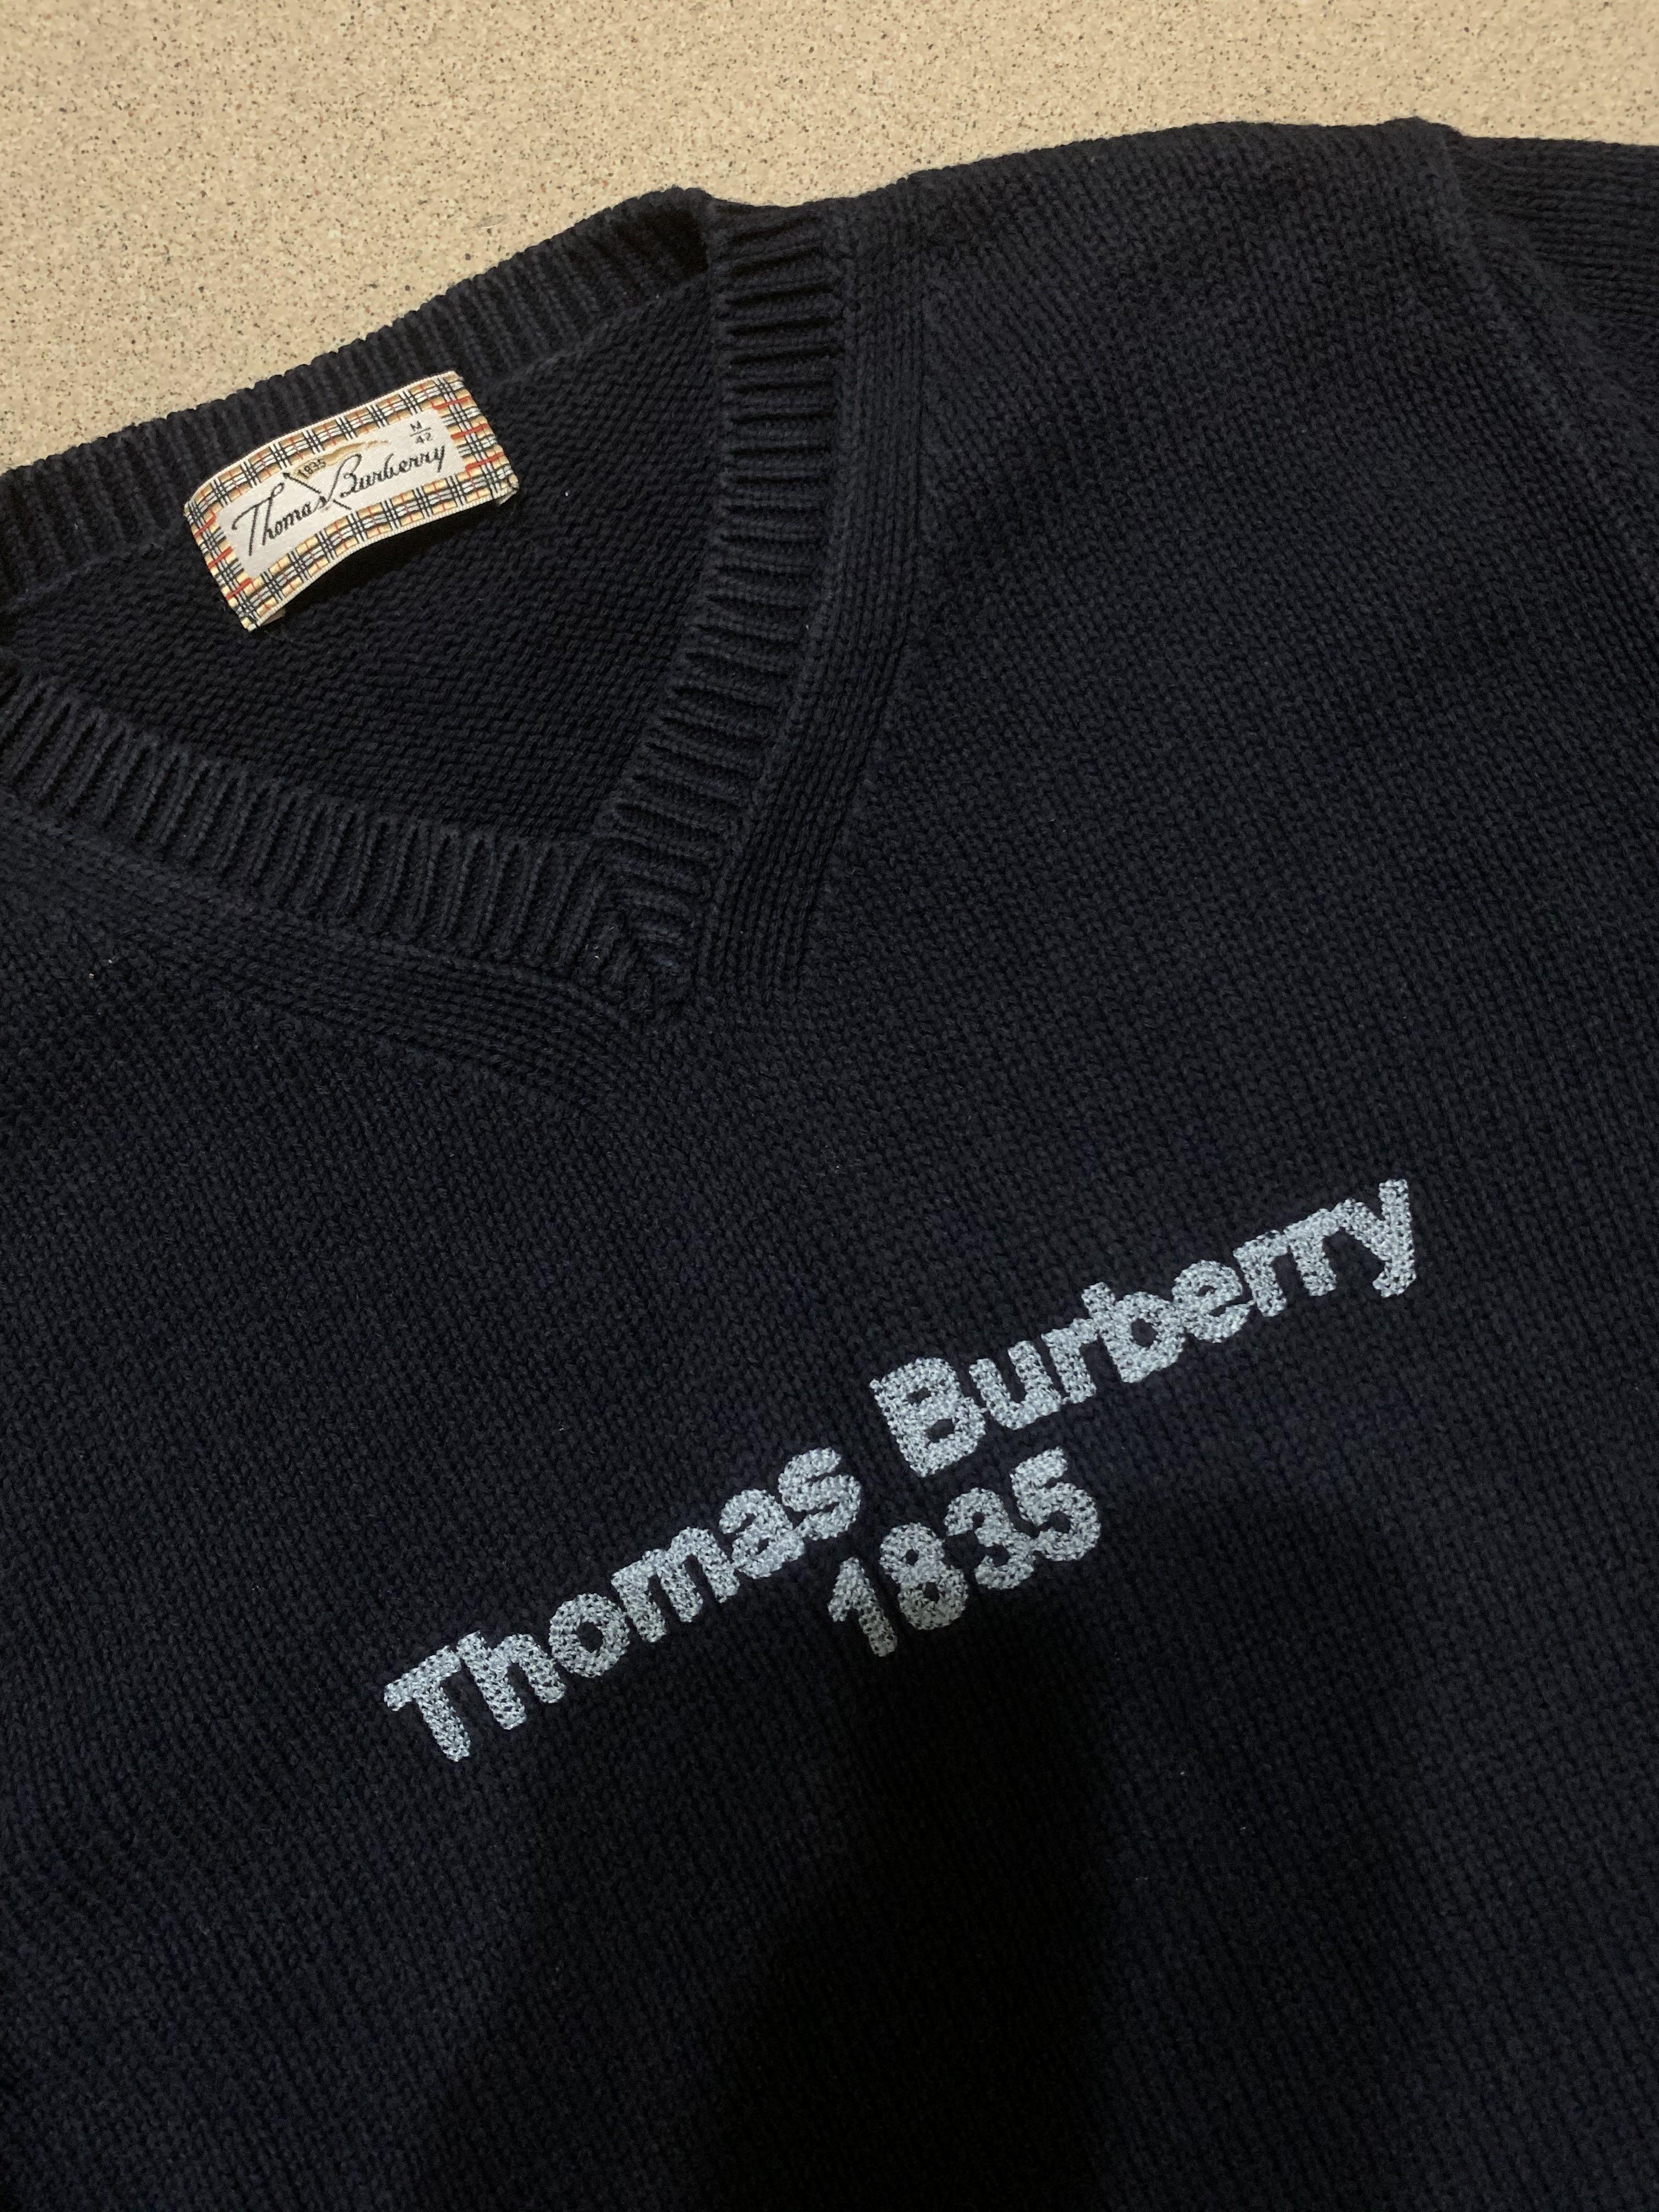 thomas burberry sweater